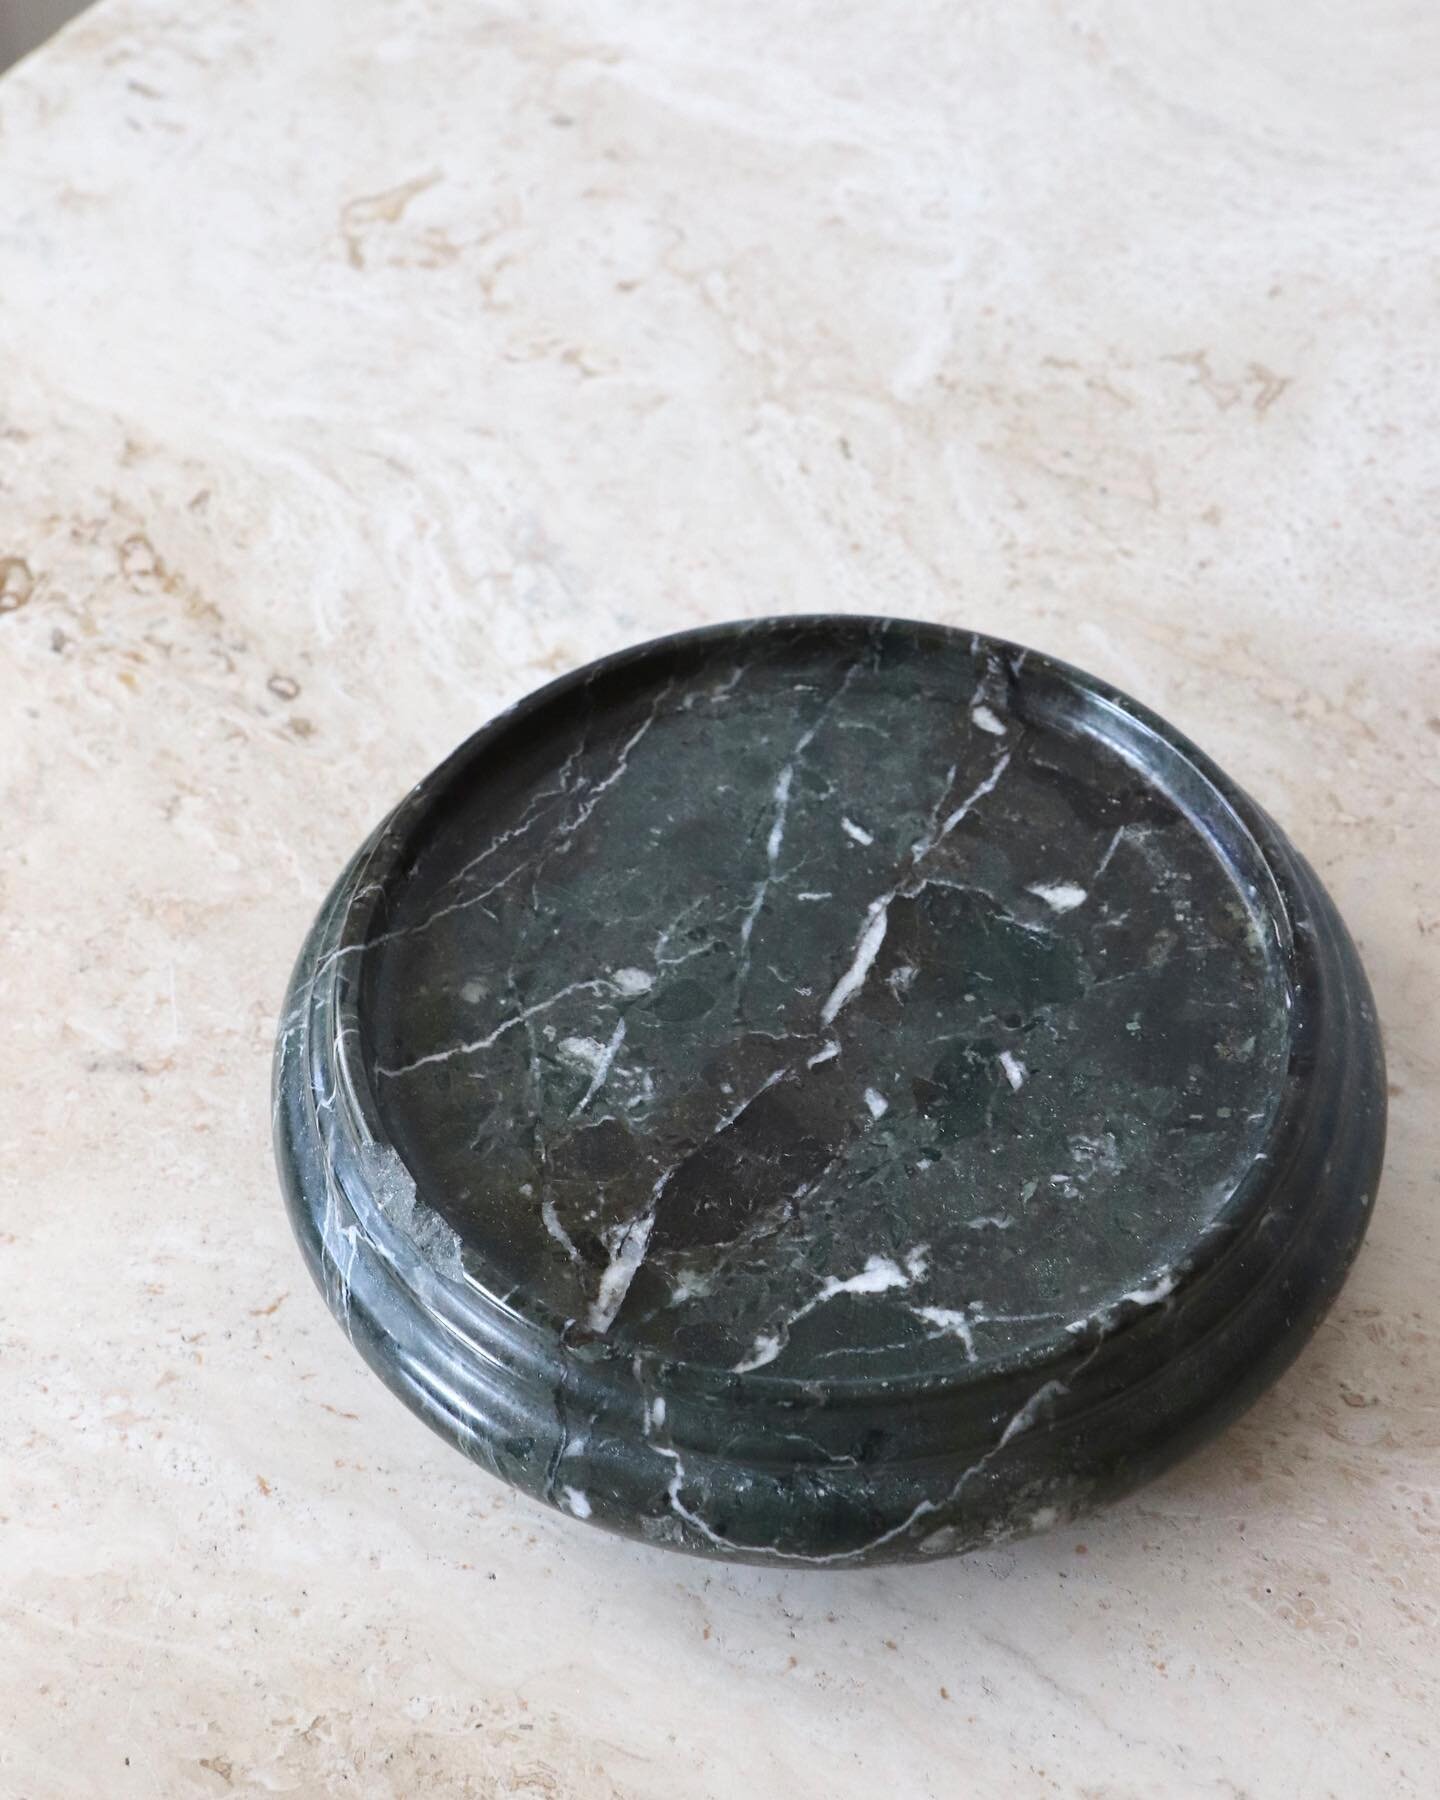 SOLD Vintage marble riser measuring 5 inches across. Small chip on rim. $36

#interiordesign #homedecor #art #vintage